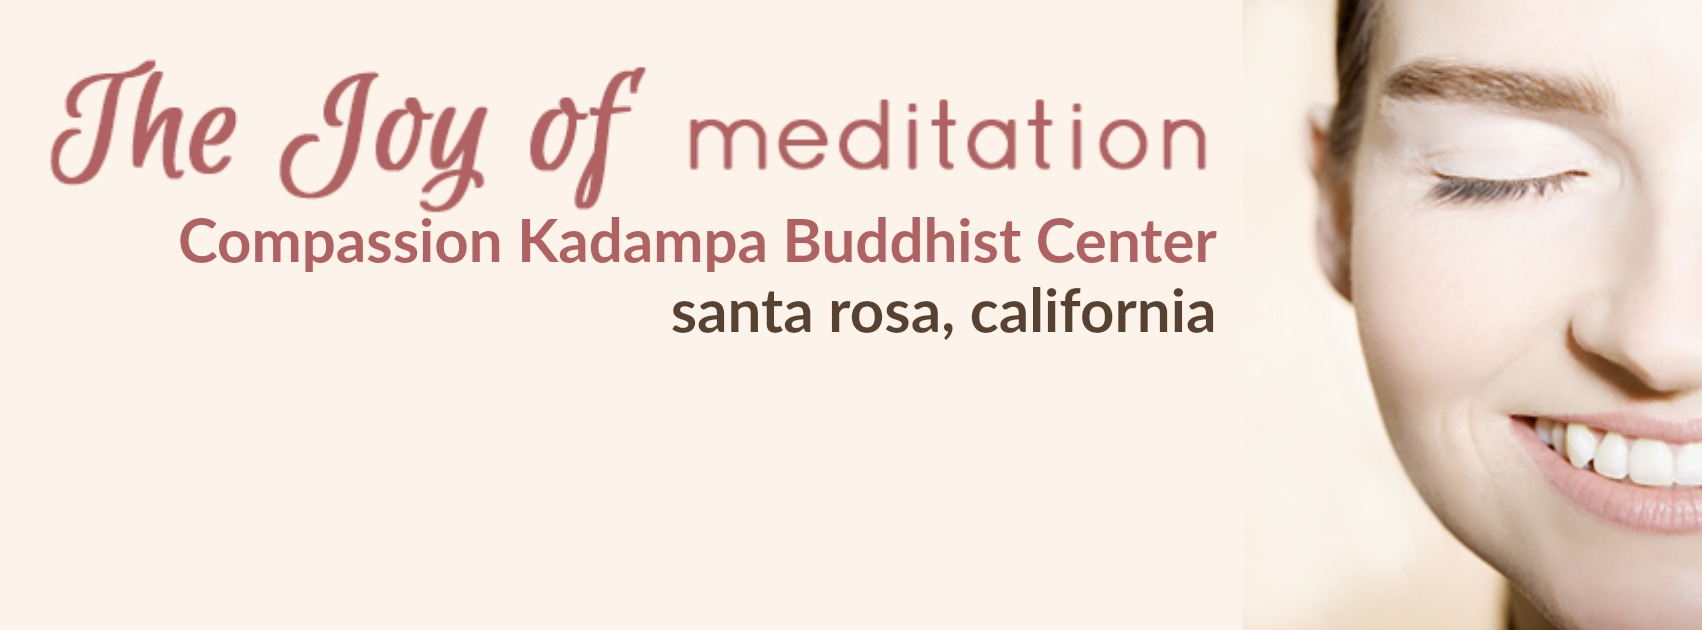 Compassion Kadampa Buddhist Center Image